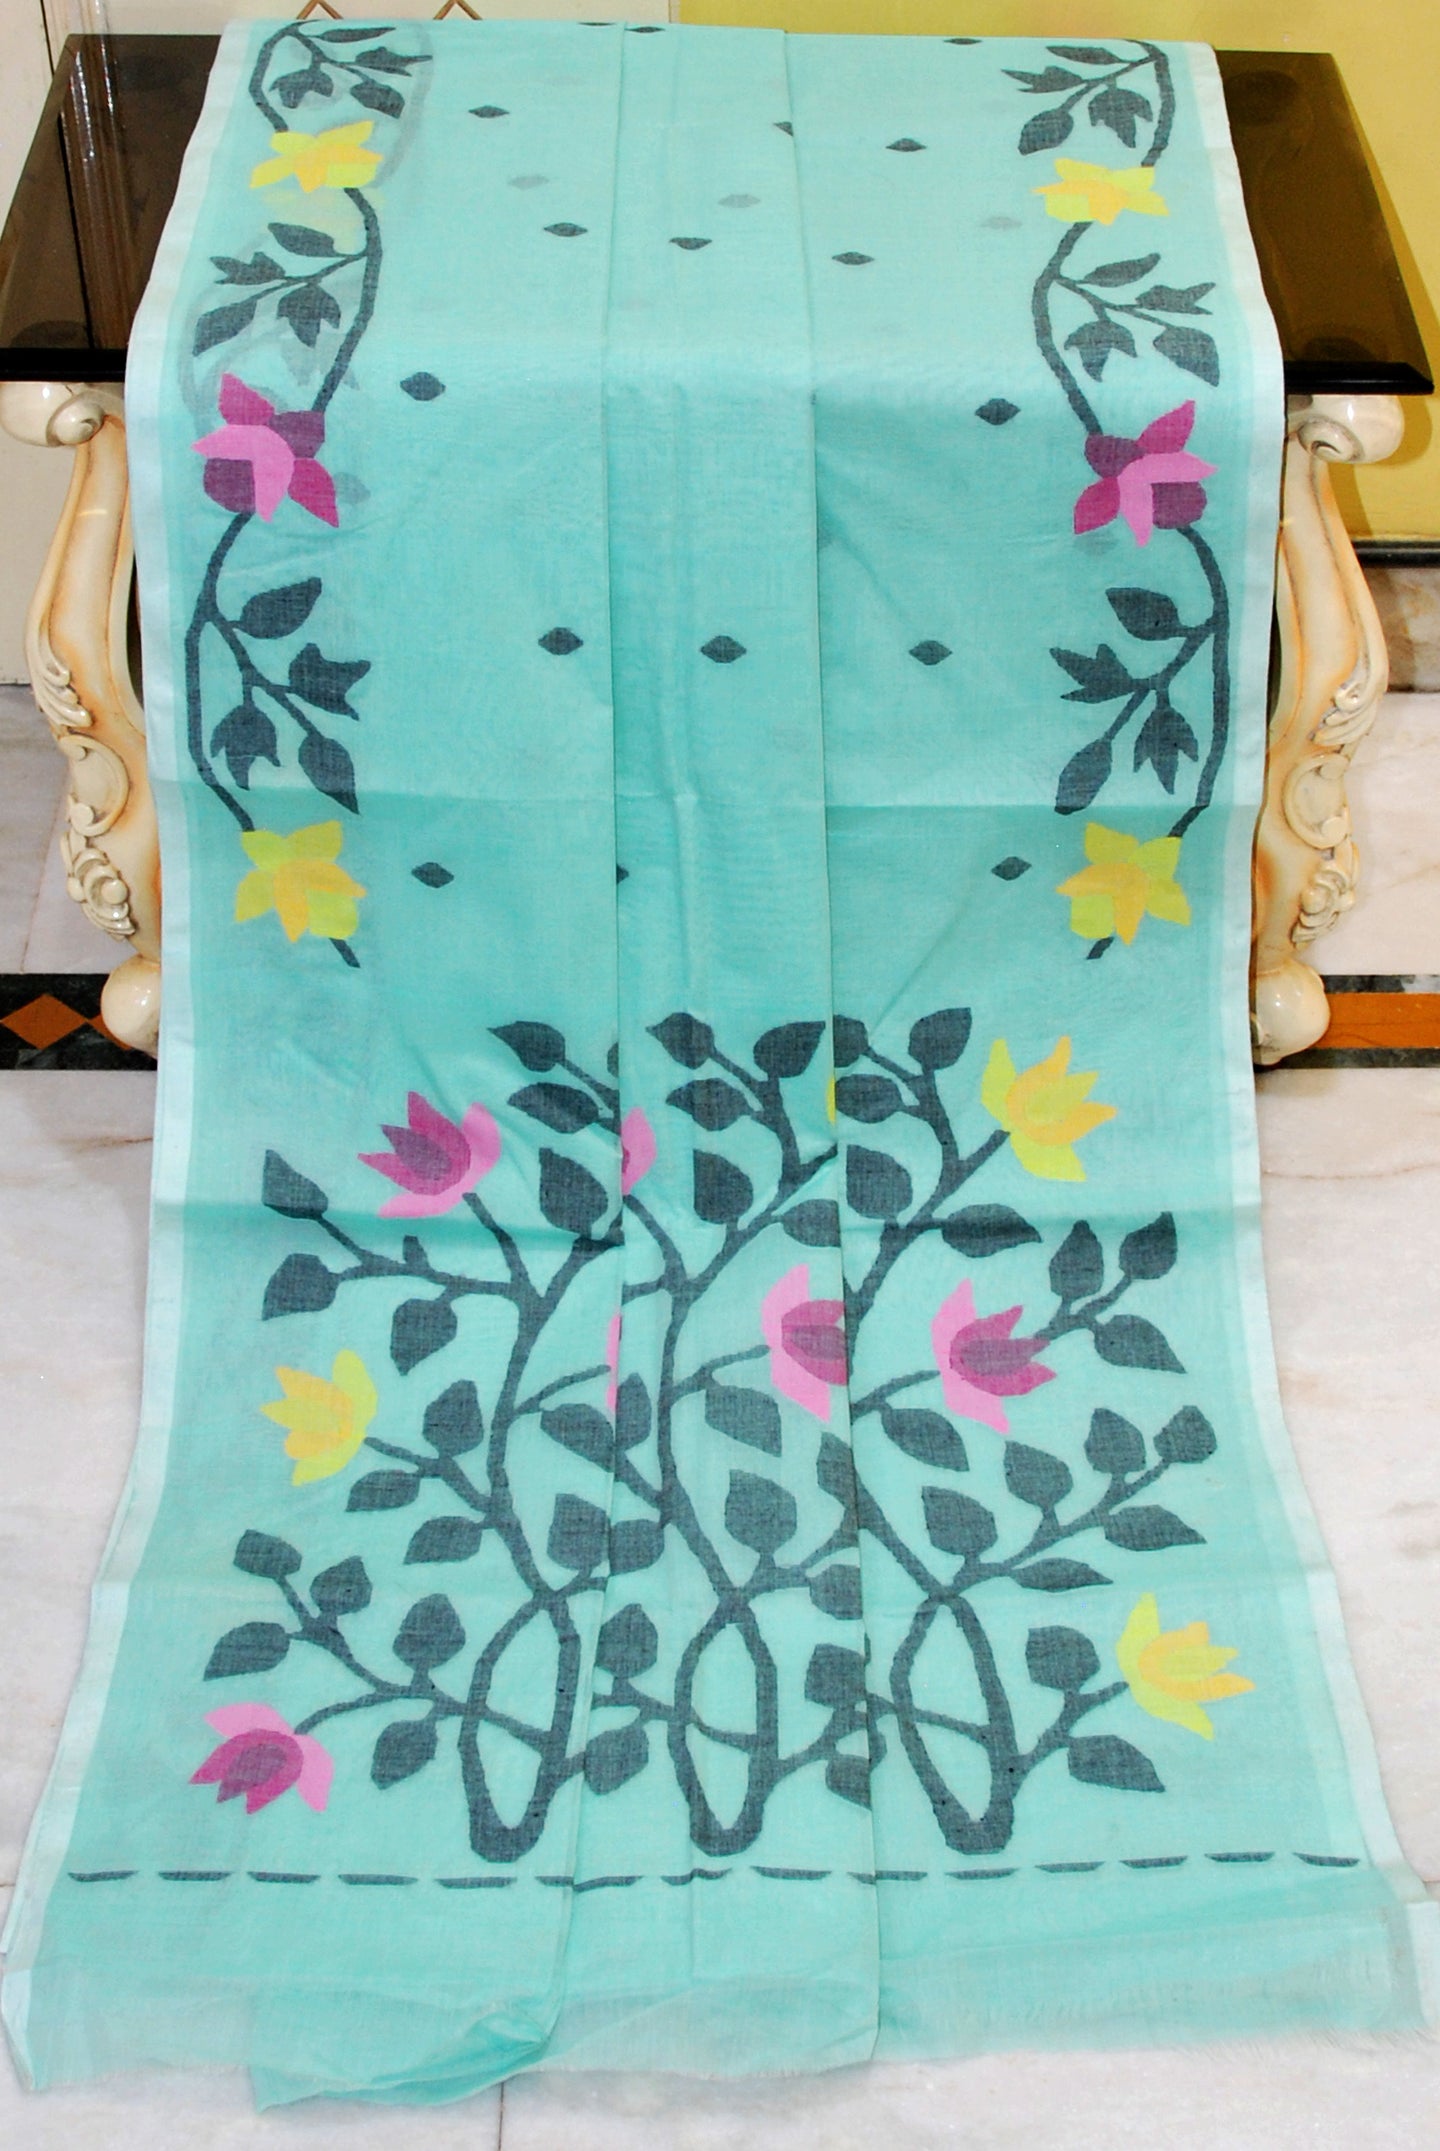 Tilfi Handwoven Work Cotton Dhakai Jamdani Saree in Light Turquoise, Black and Multicolored Thread Work